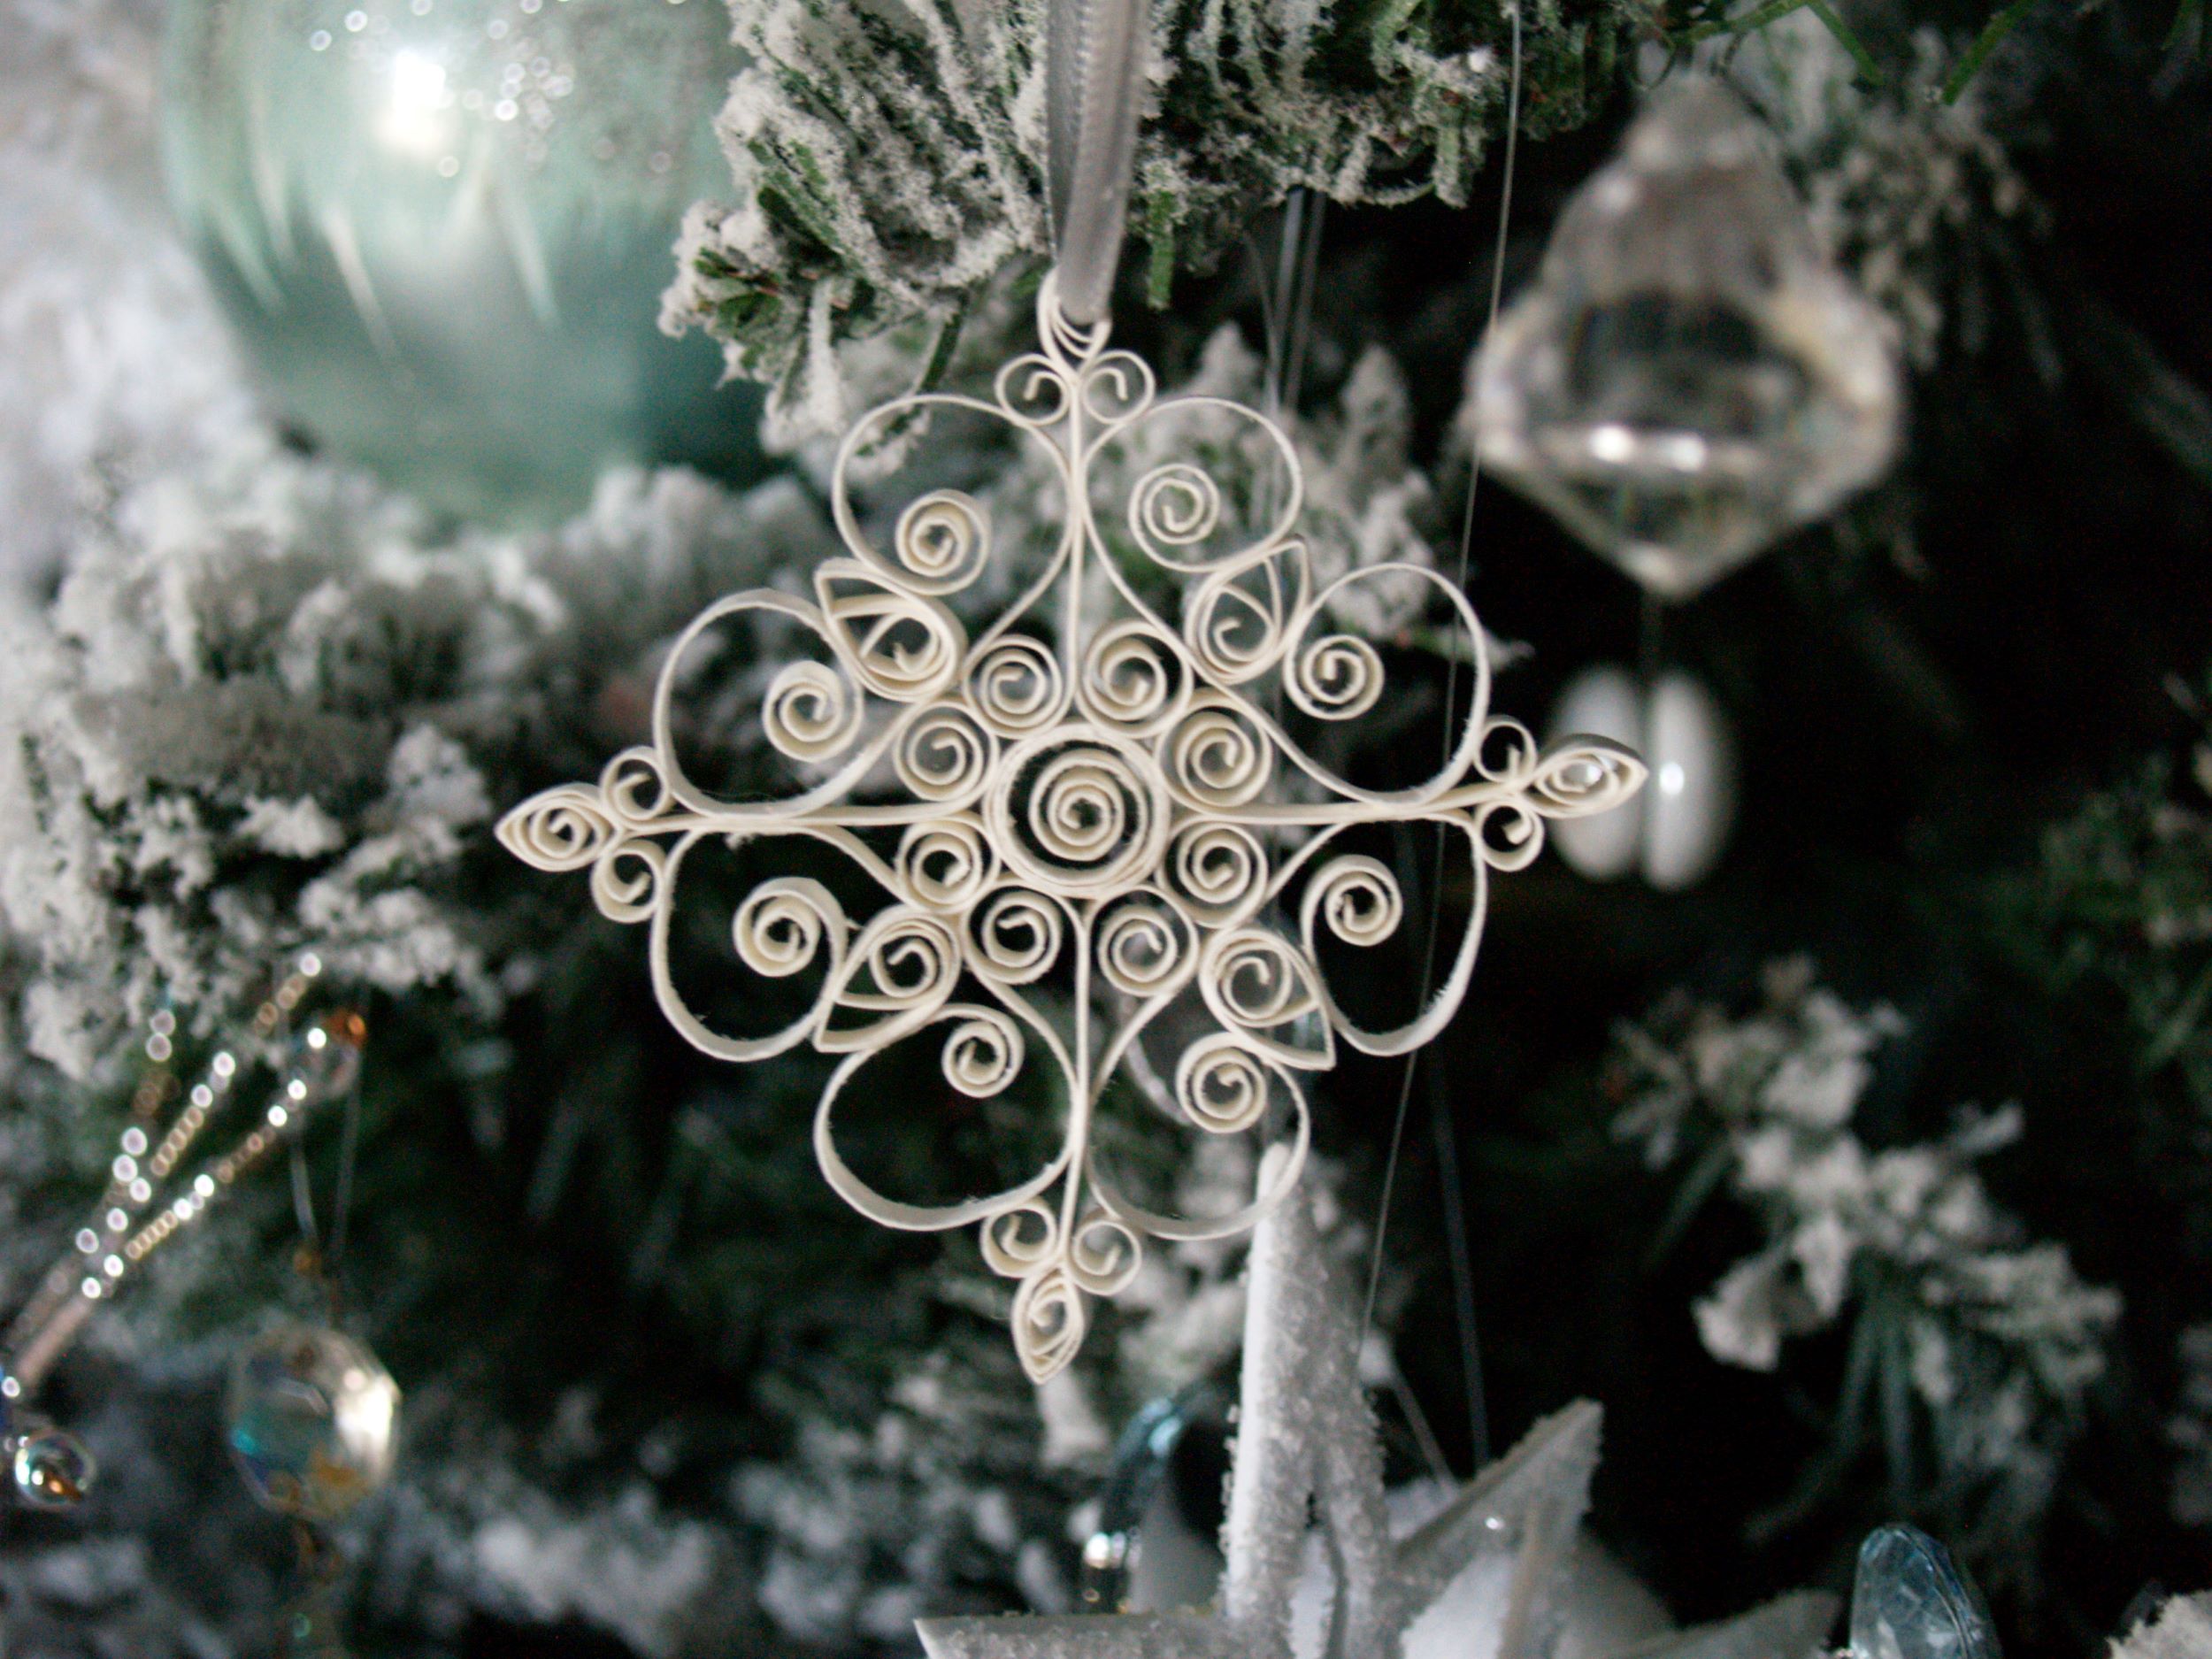 Felt Snowflake Ornaments - Positively Splendid {Crafts, Sewing